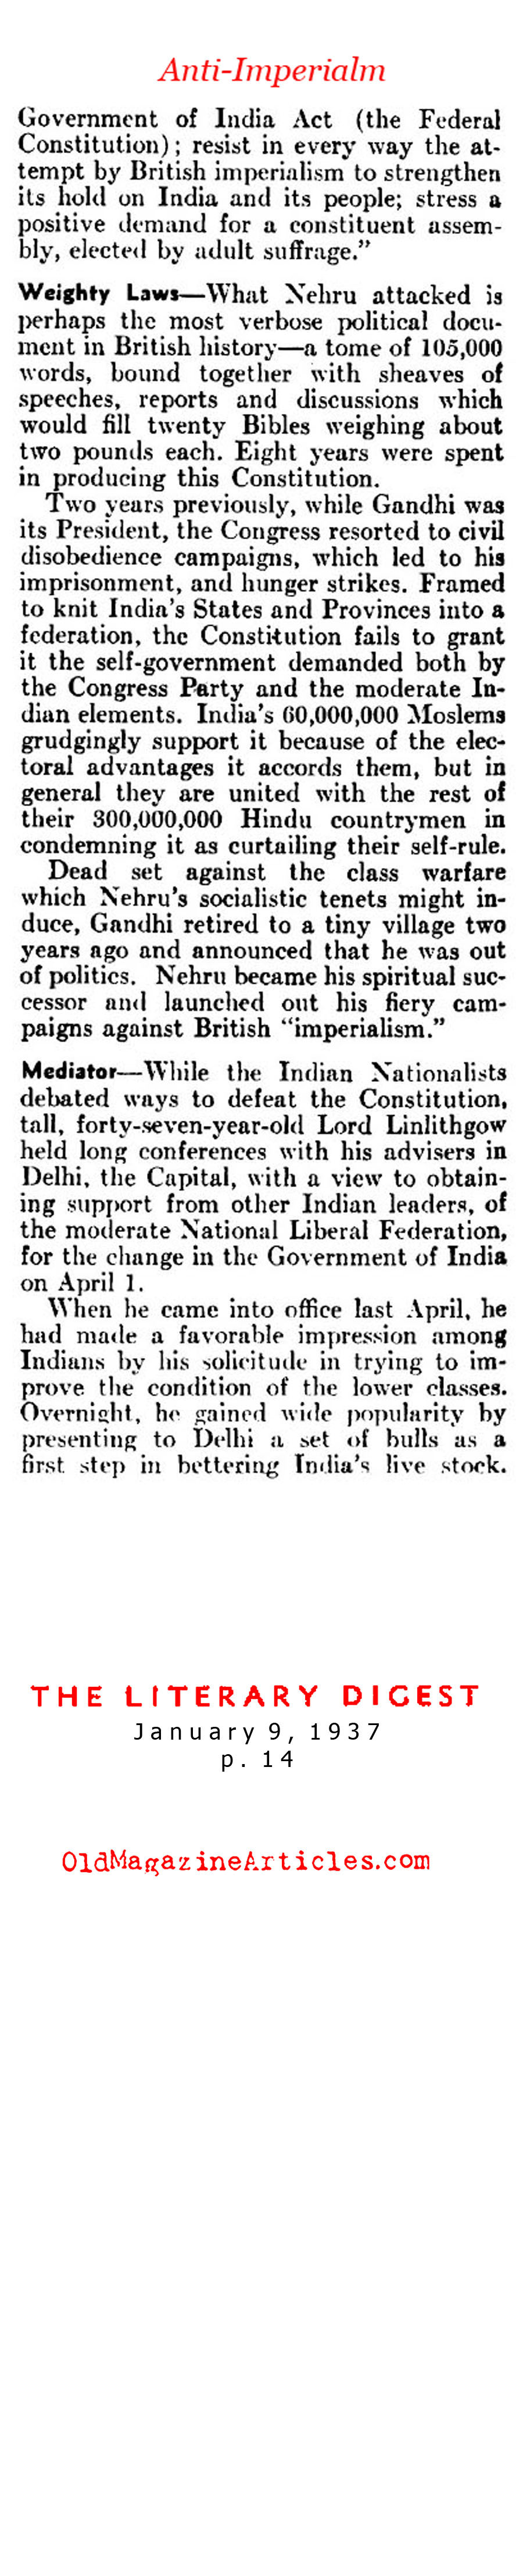 Gandhi's Struggle Against British Imperialism (Literary Digest, 1937)